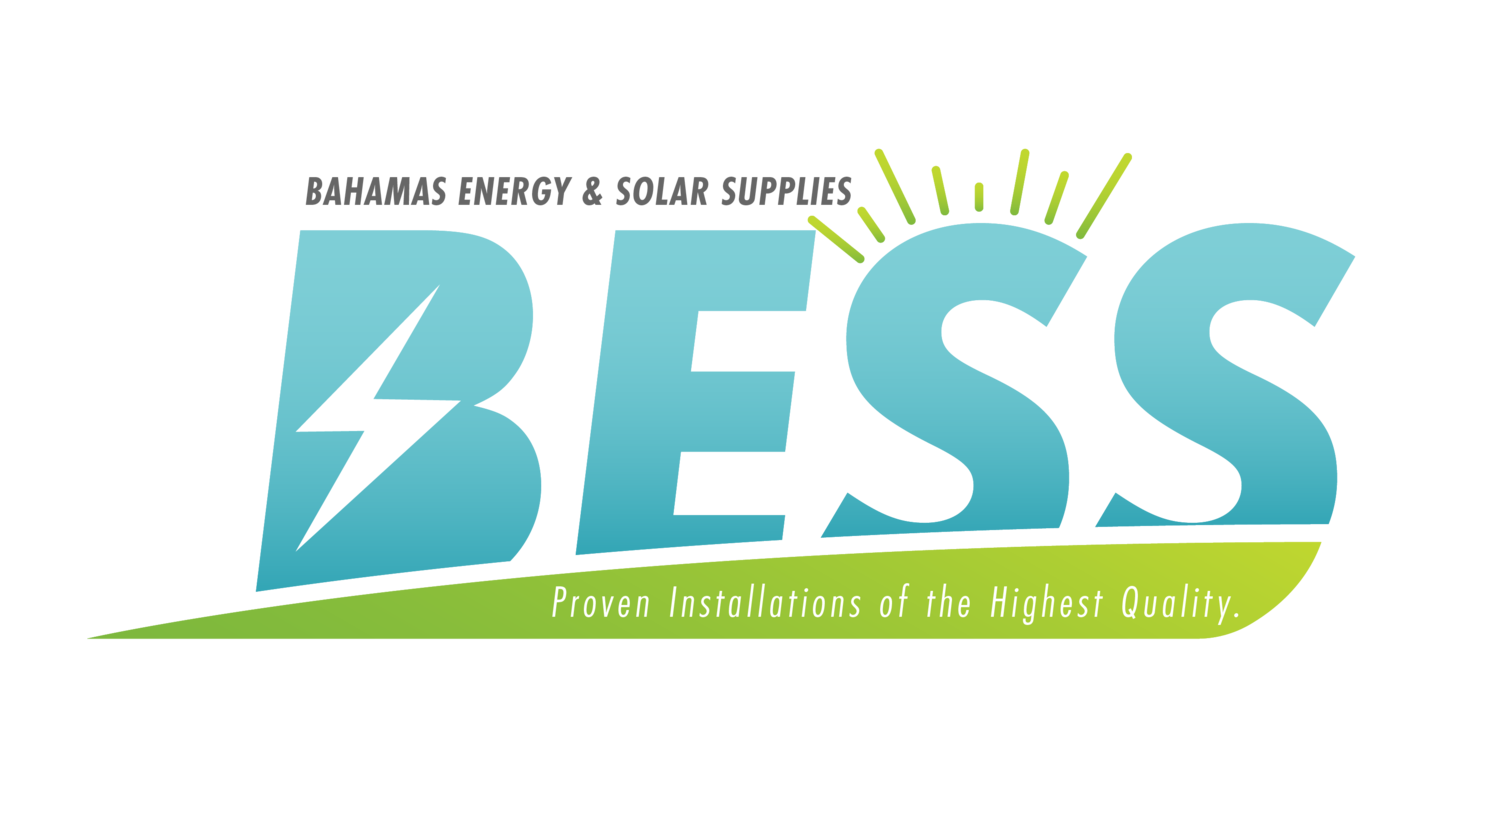 Bahamas Energy & Solar Supplies